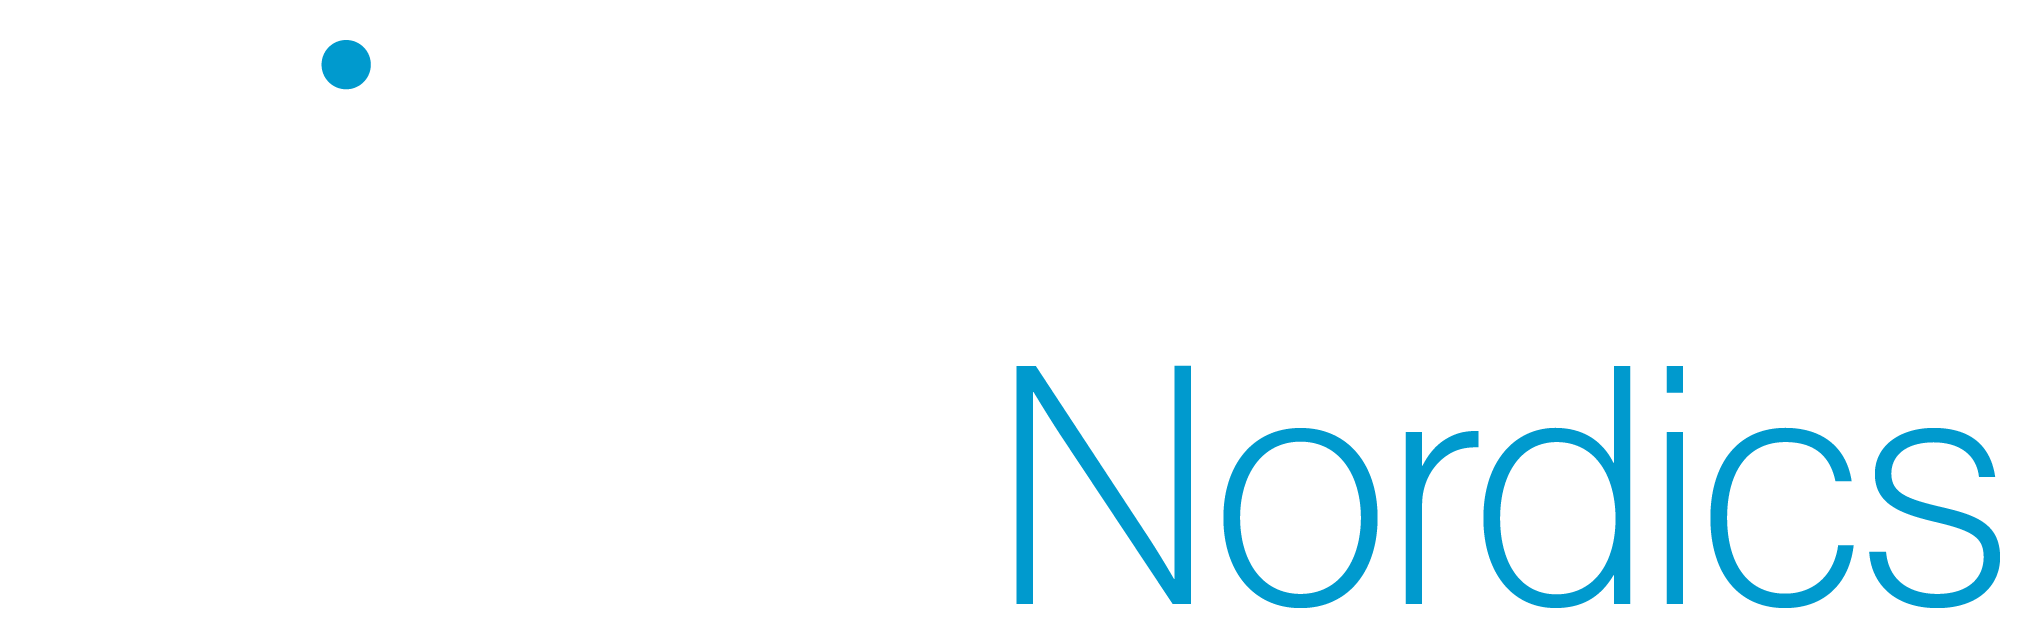 Align-NORDICS-Forum 2021 logo RGB-02